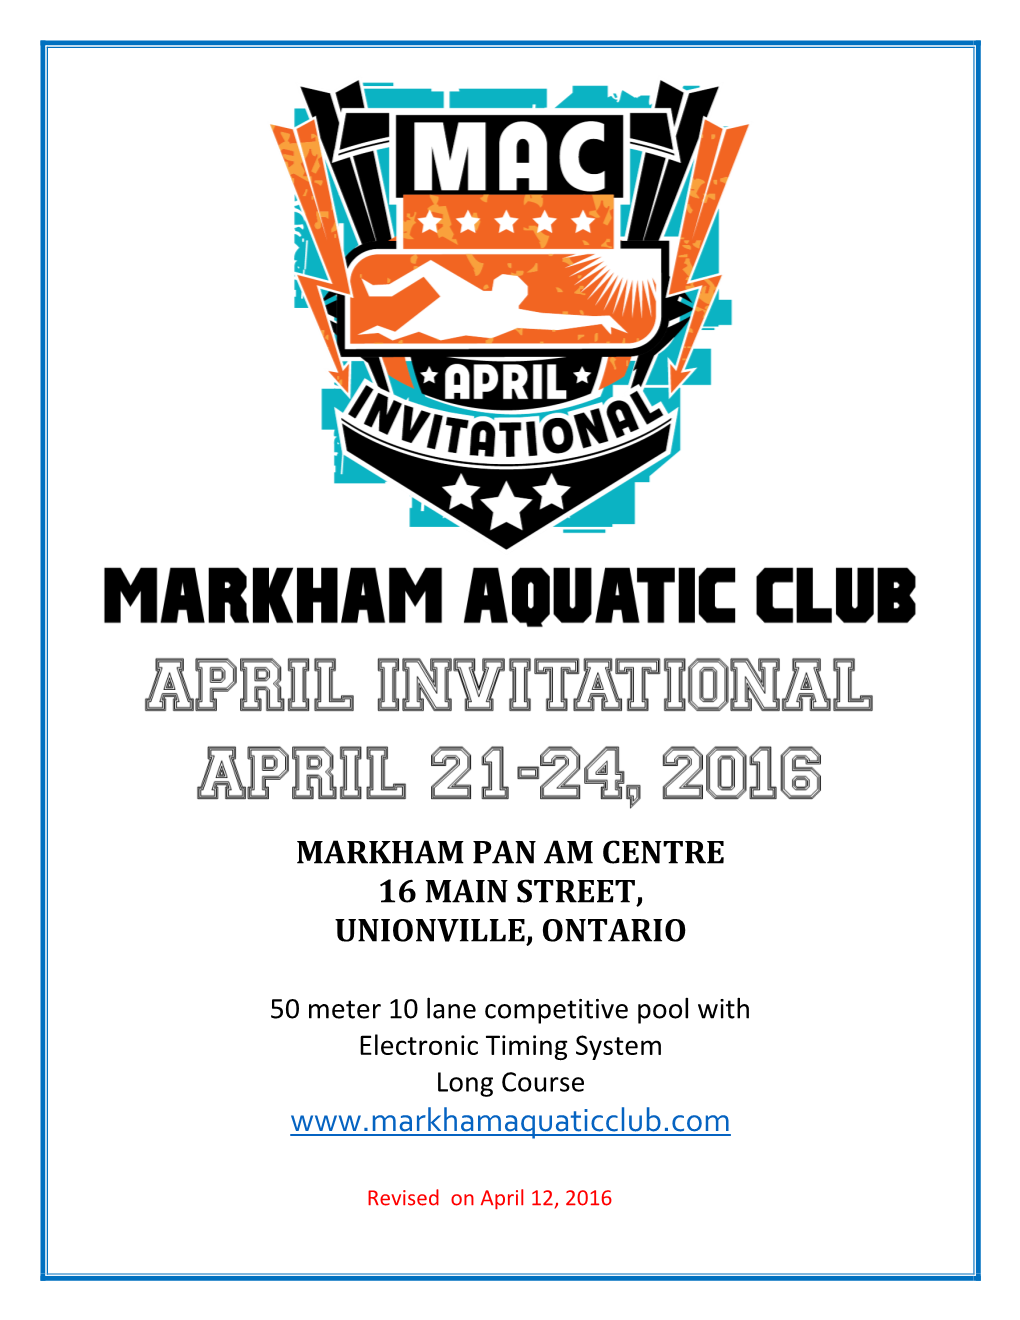 Markham Pan Am Centre 16 Main Street, Unionville, Ontario